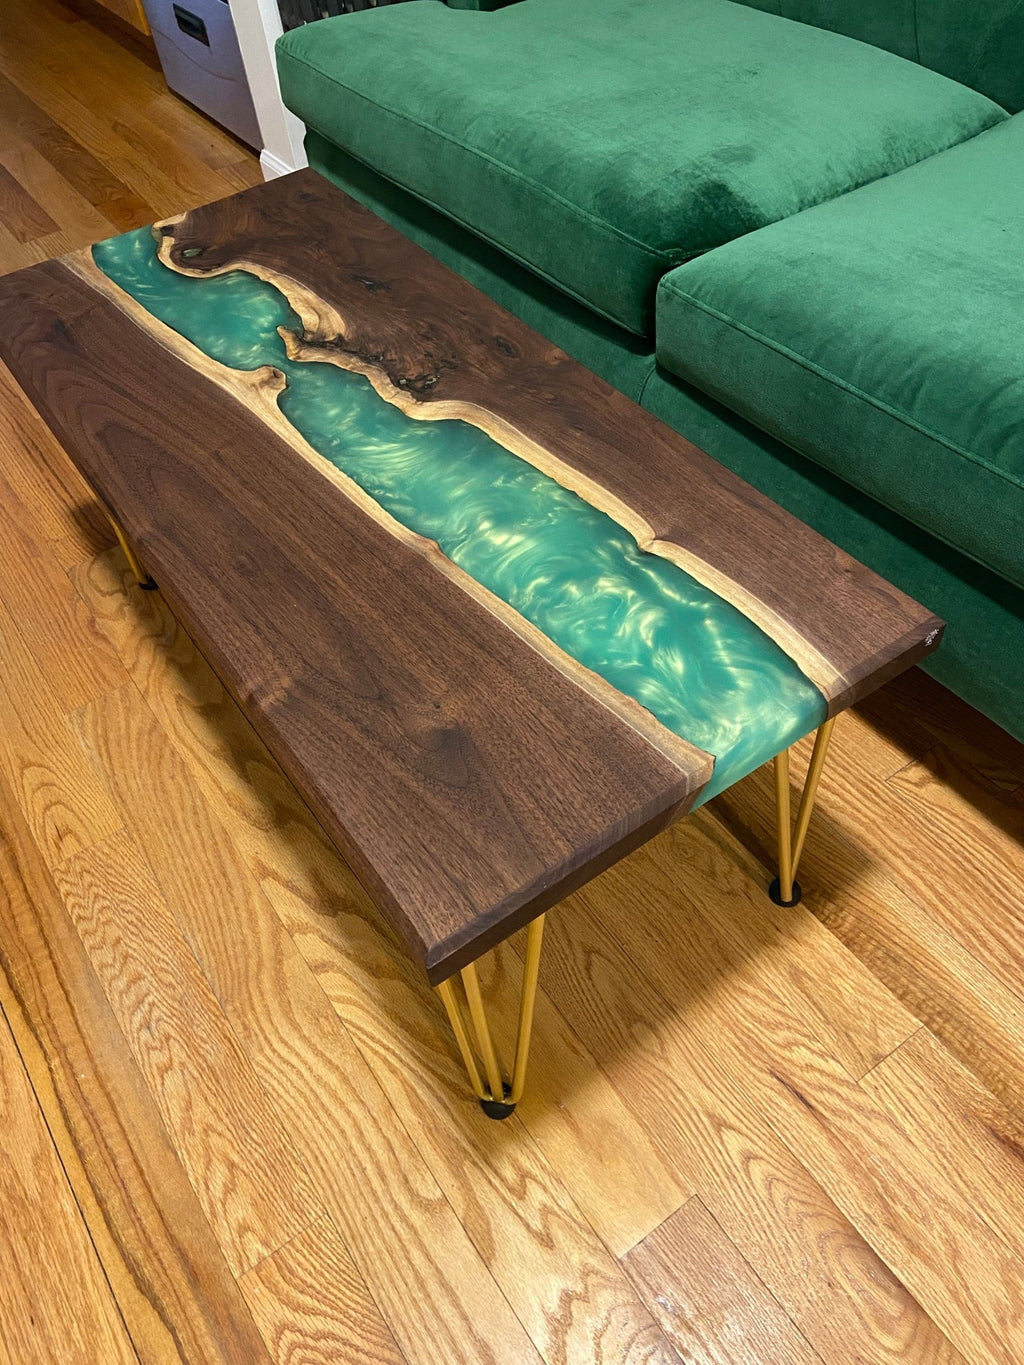 96 x 48 Epoxy Resin Wooden Table Top Unique River Table Design Home Decor